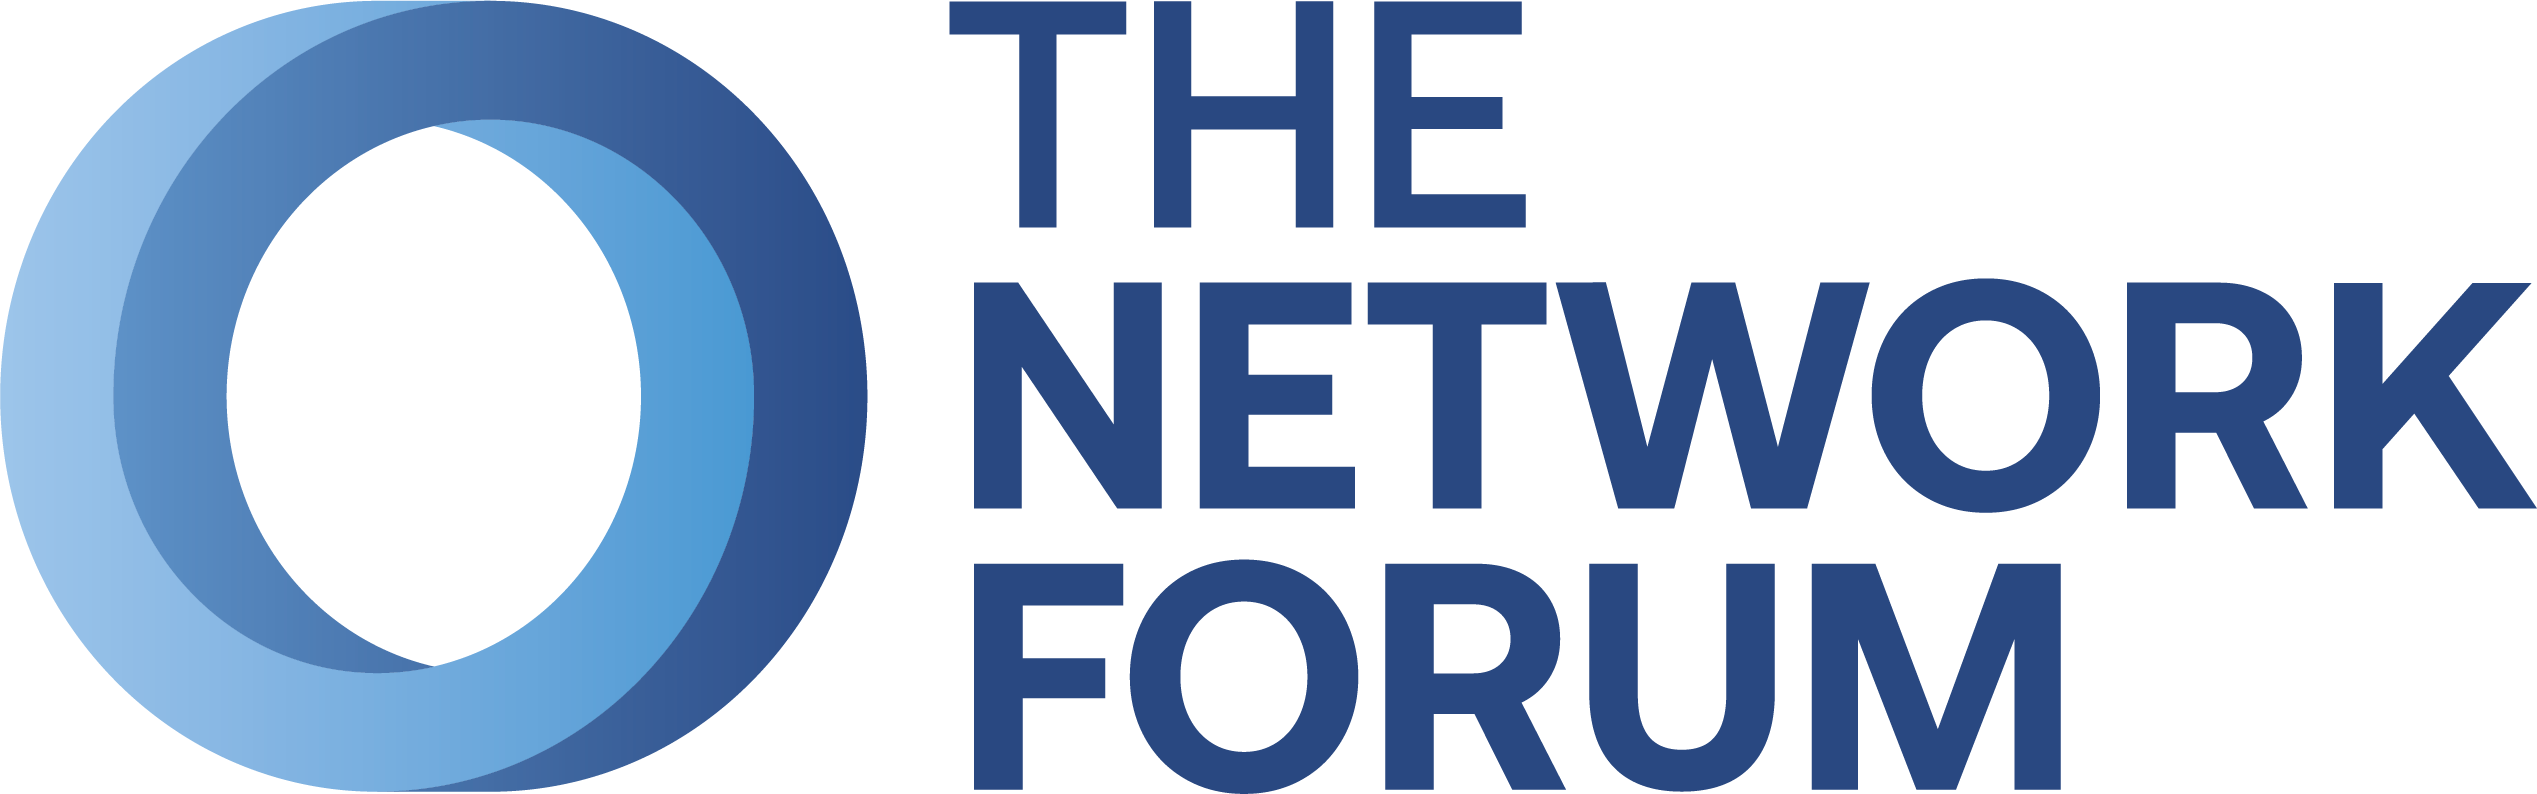 The Network Forum logo